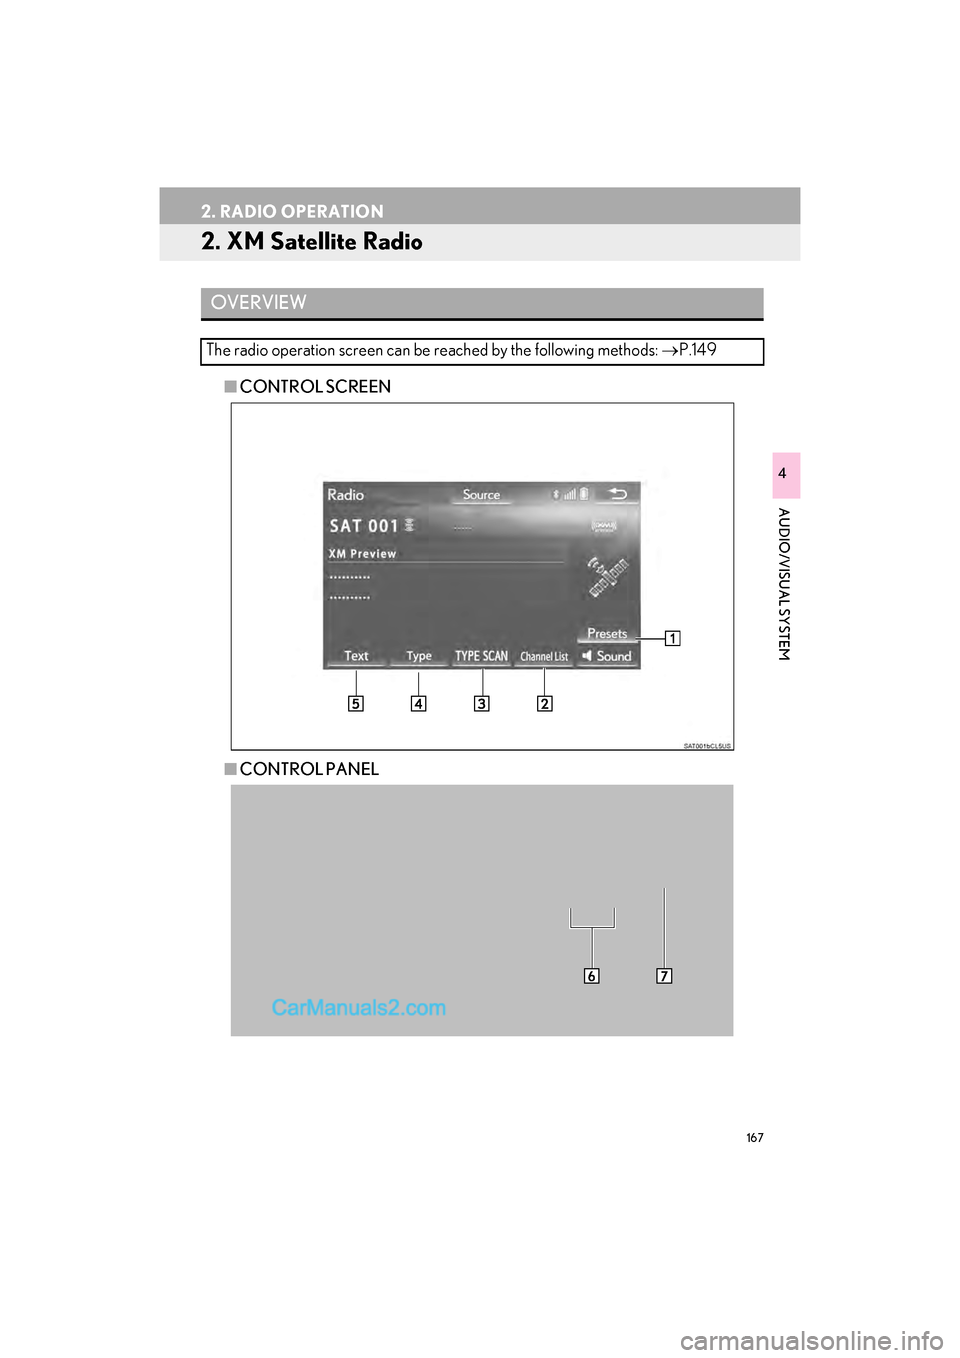 Lexus GS F 2017  Navigation Manual 167
2. RADIO OPERATION
GS_Navi+MM_OM30F99U_(U)16.07.11     14:00
AUDIO/VISUAL SYSTEM
4
2. XM Satellite Radio
■CONTROL SCREEN
■ CONTROL PANEL
OVERVIEW
The radio operation screen can be  reached by 